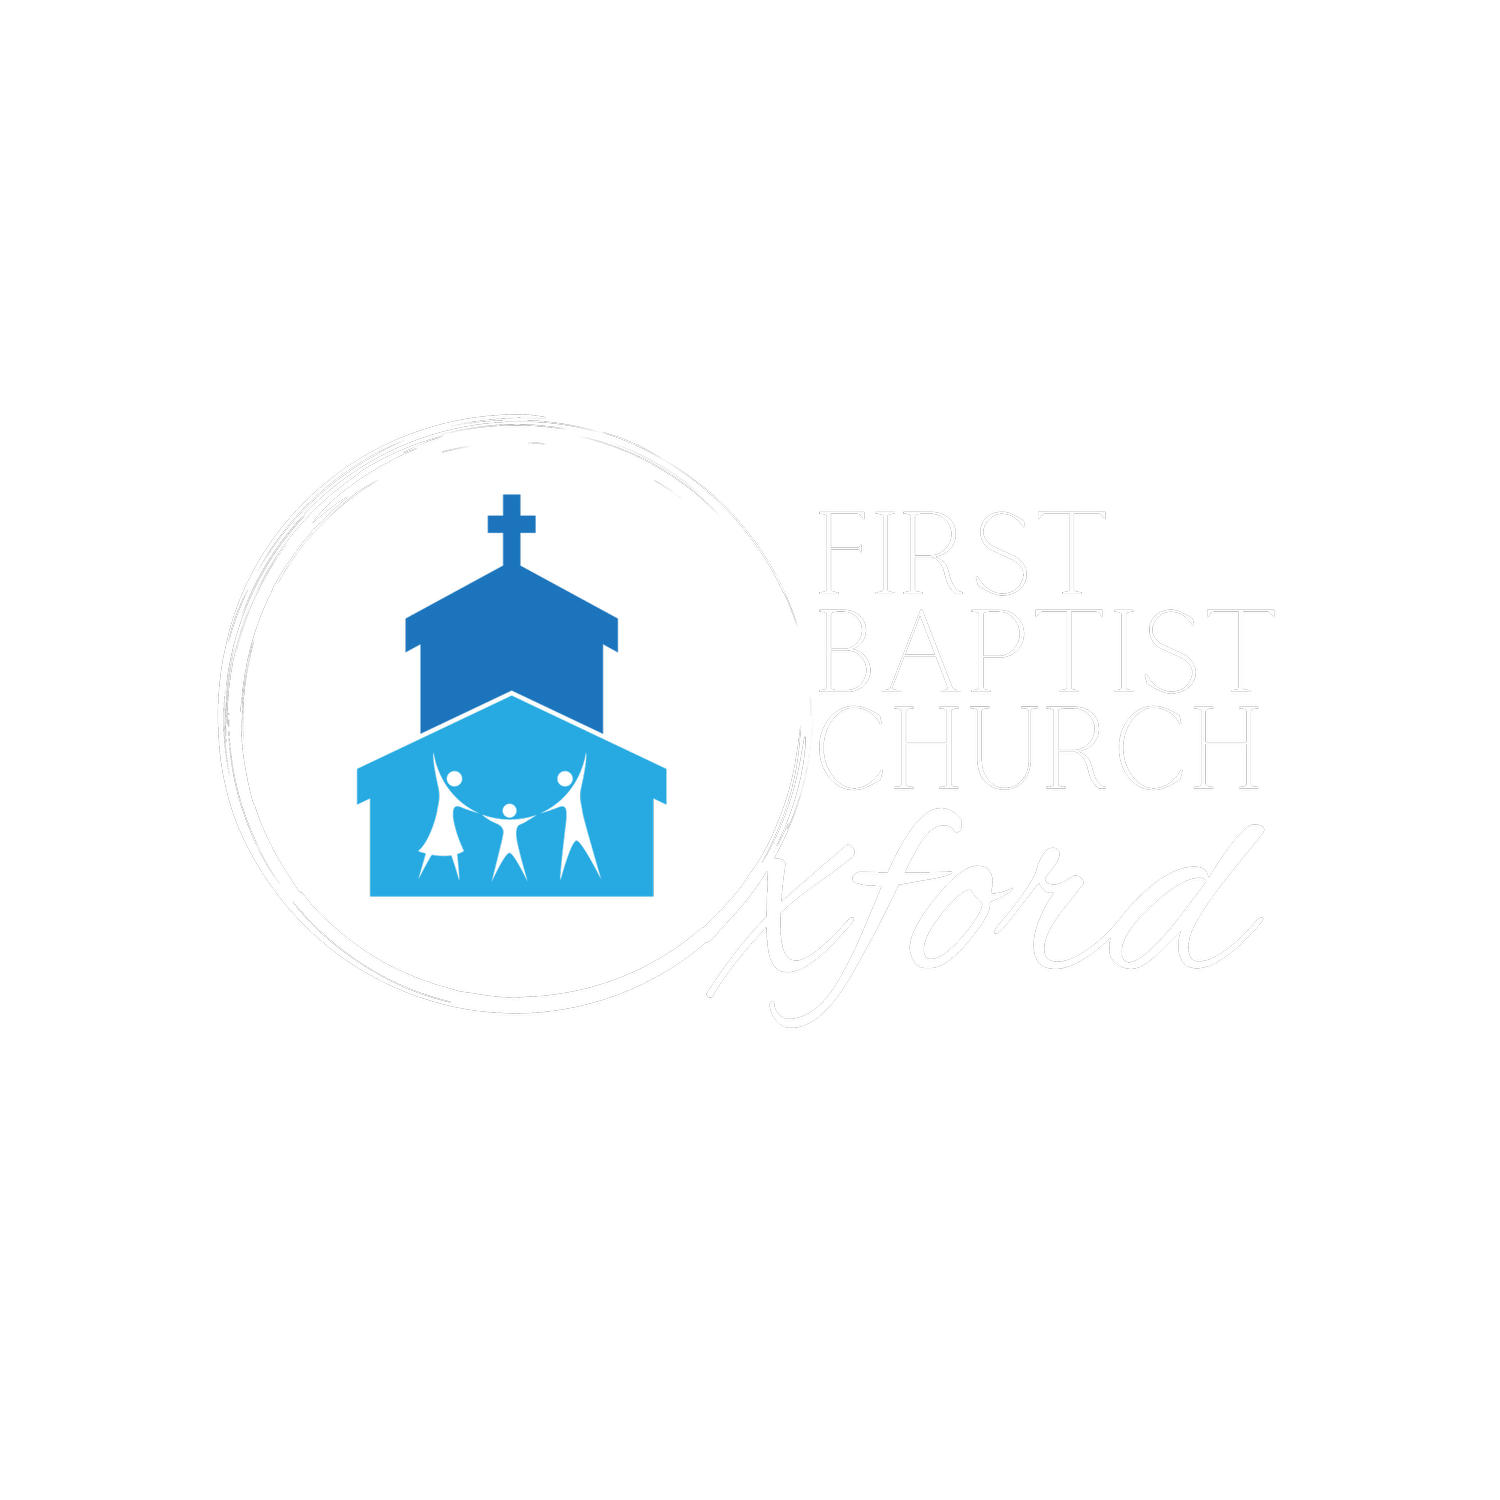 First Baptist Church Oxford, FL